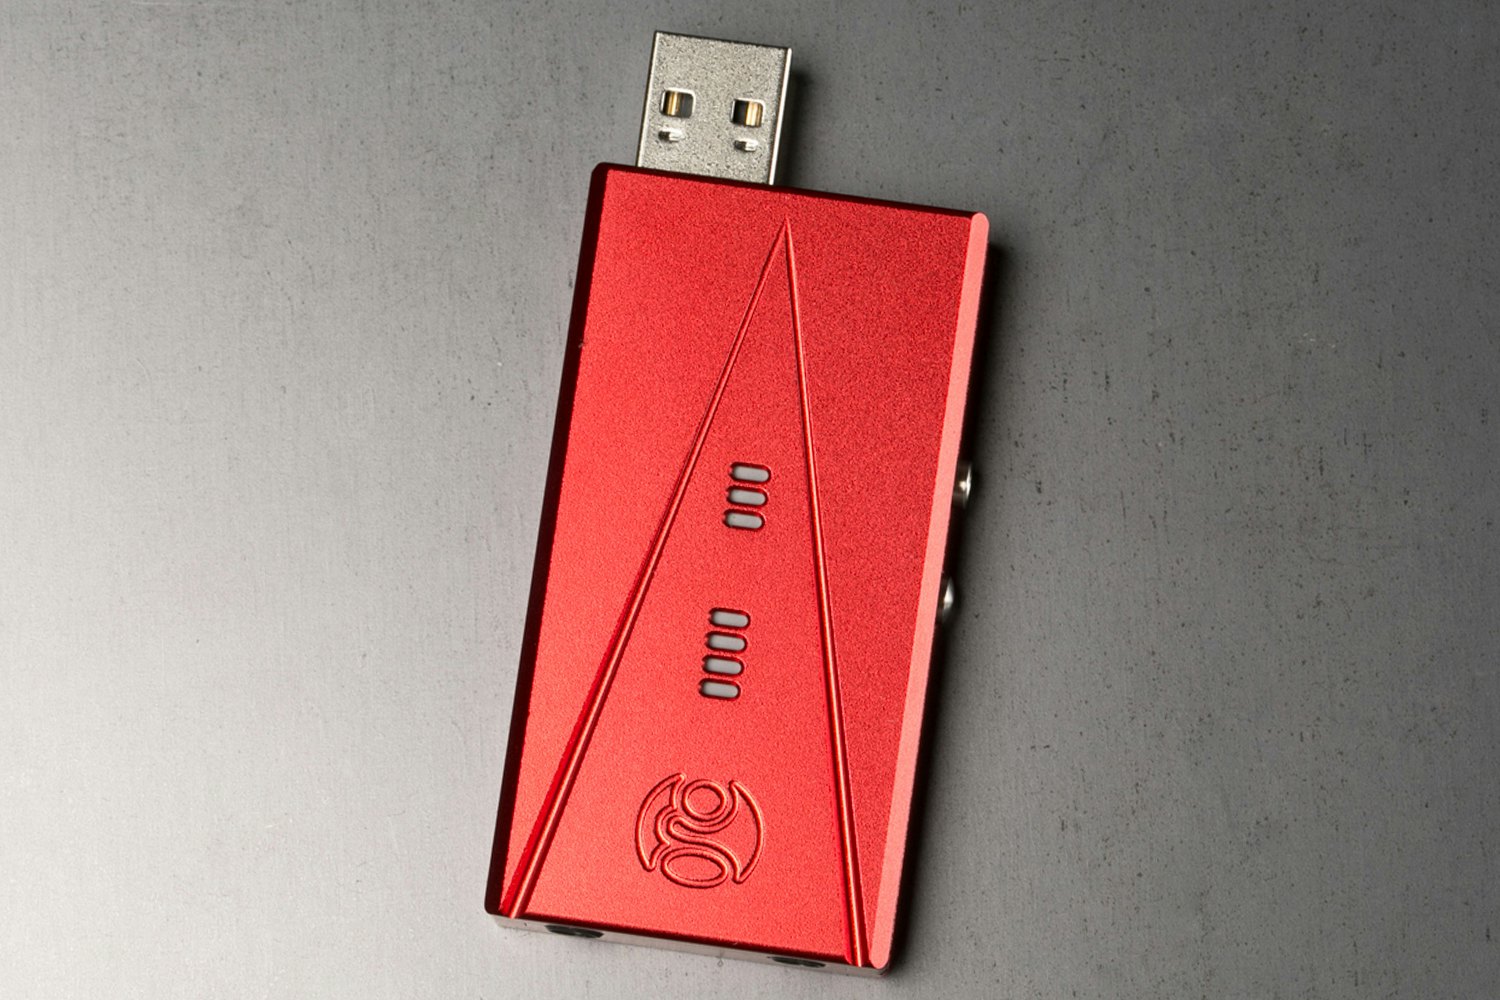 Geek Out 1000 USB DAC/Amp